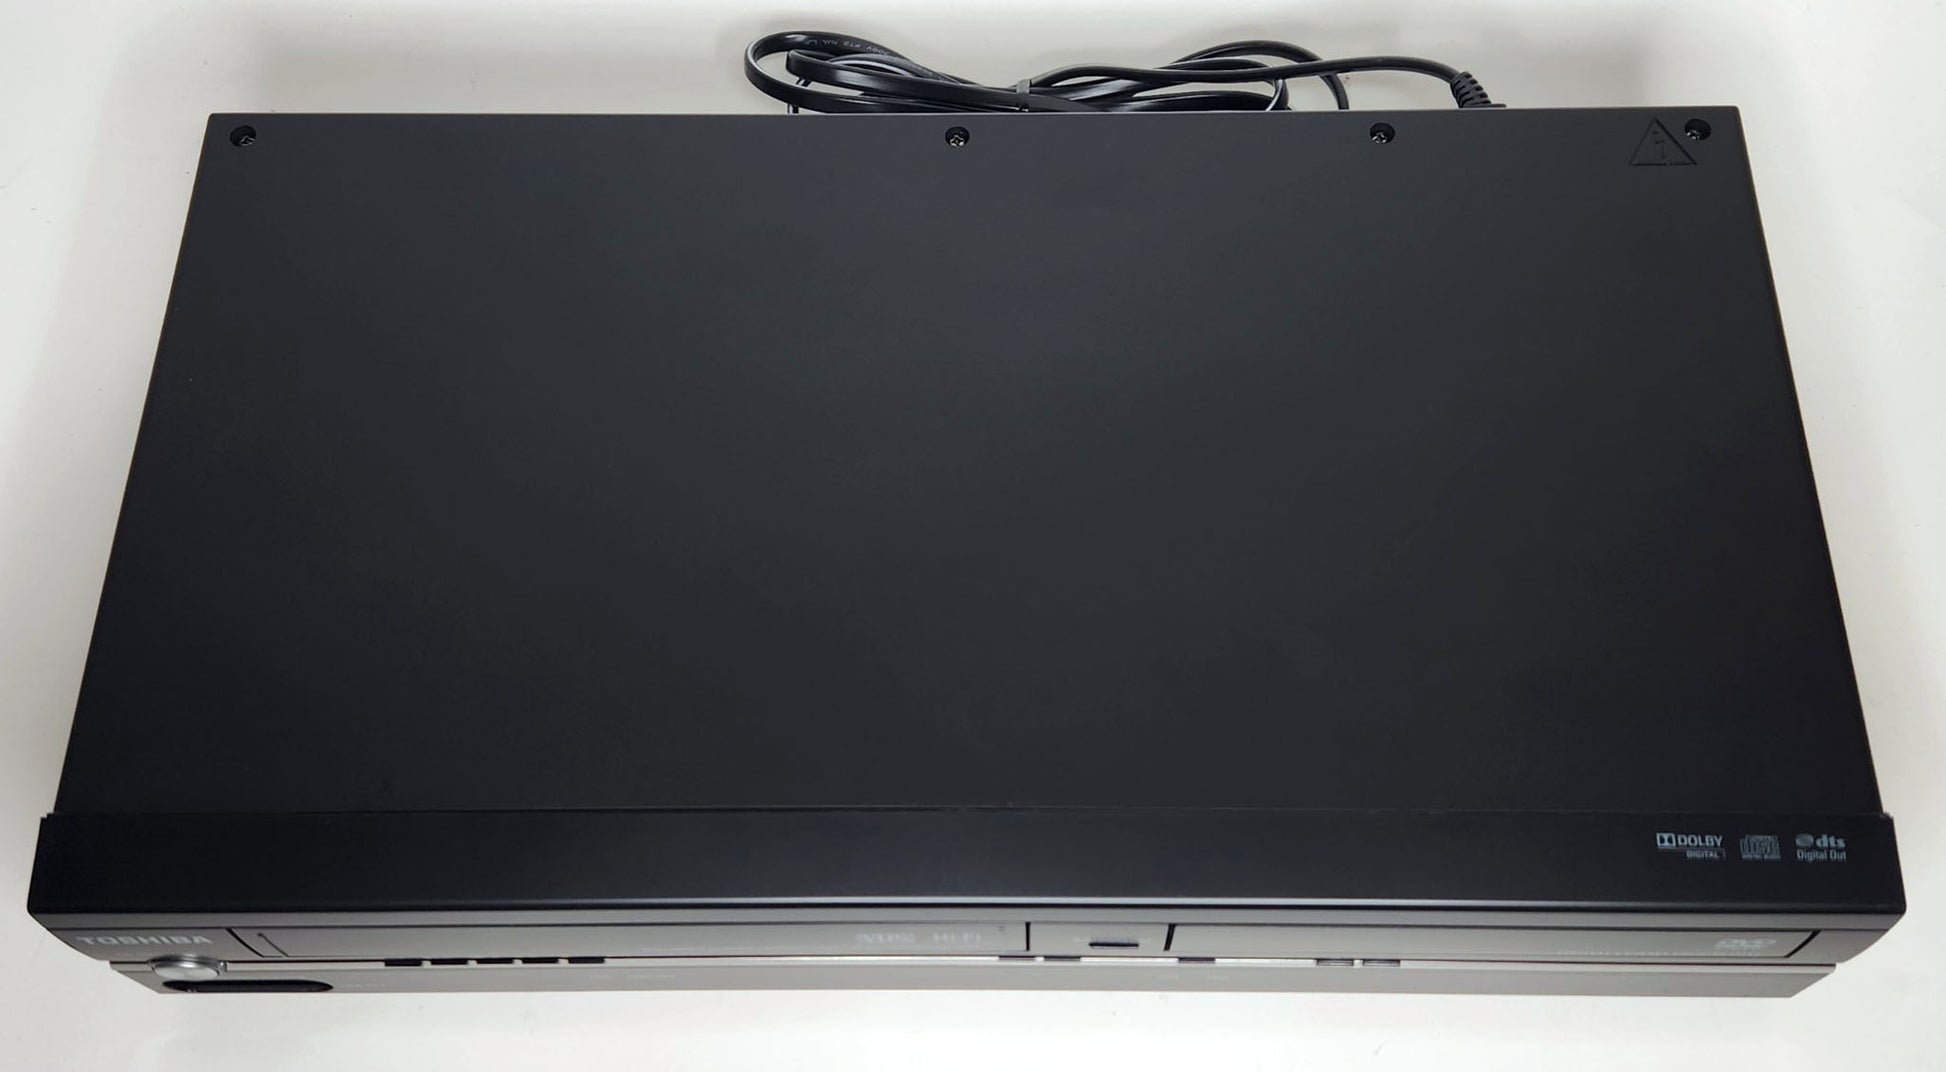 Toshiba SD-V296-K-TU VCR/DVD Player Combo - Top